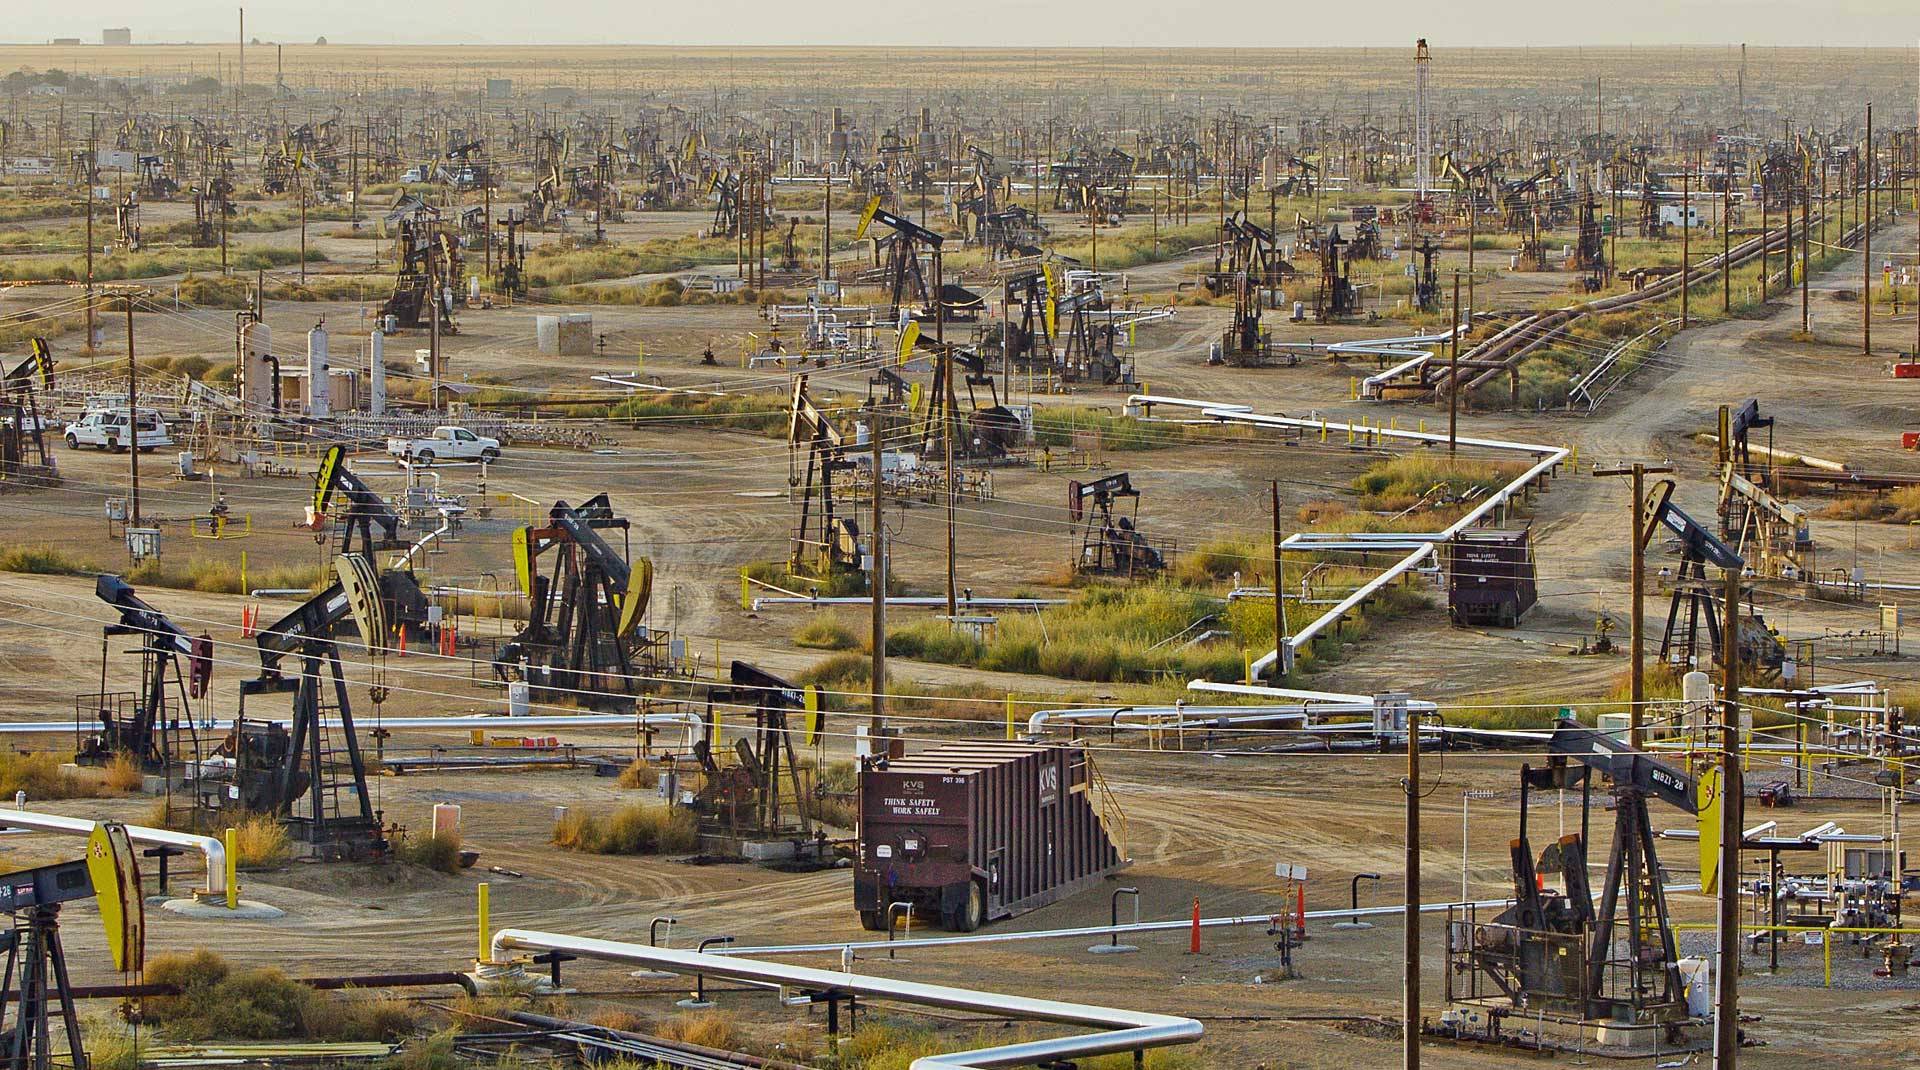 View of an oilfield.